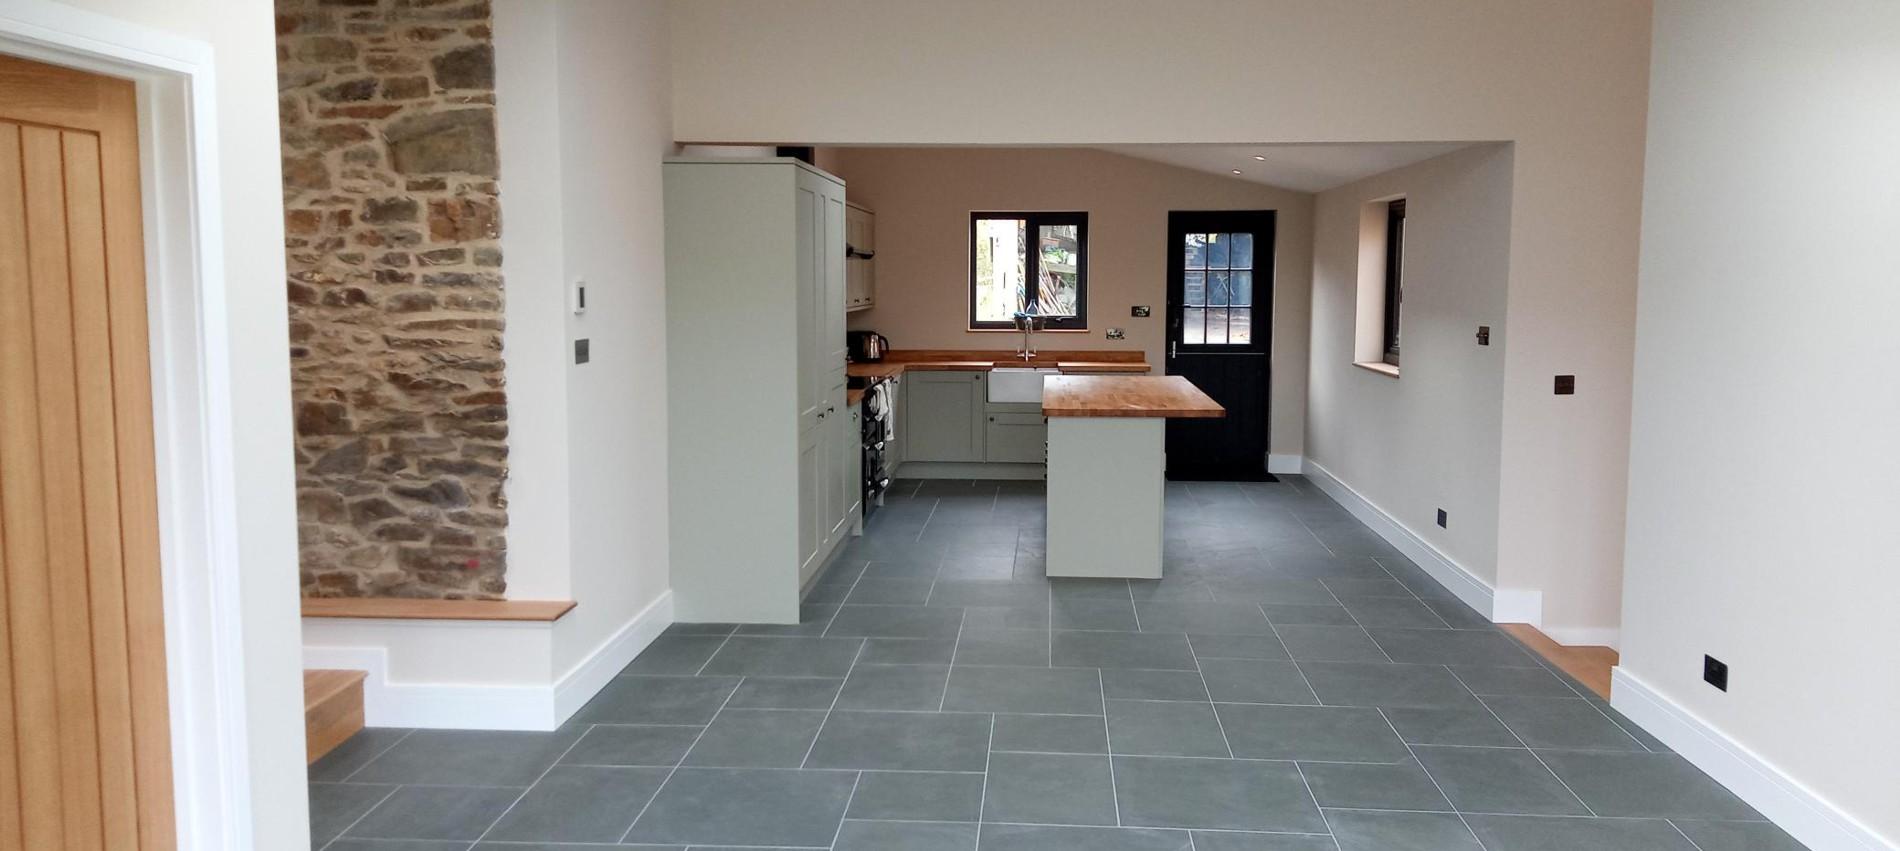 Blue grey slate floor tiles in open plan kitchen.